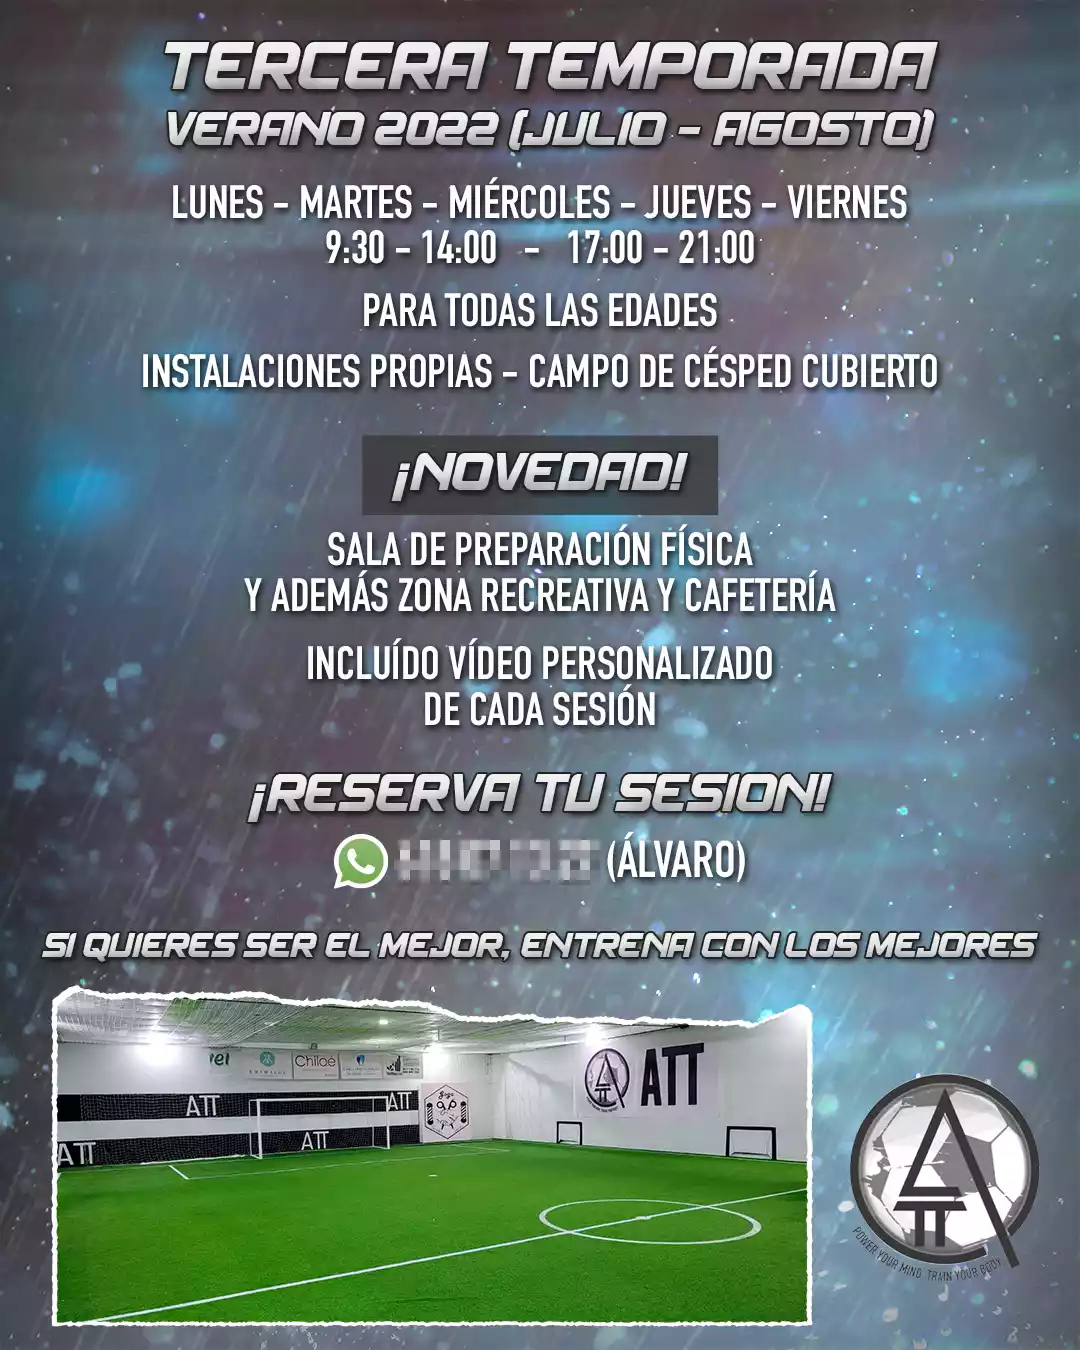 Centro ATT season design